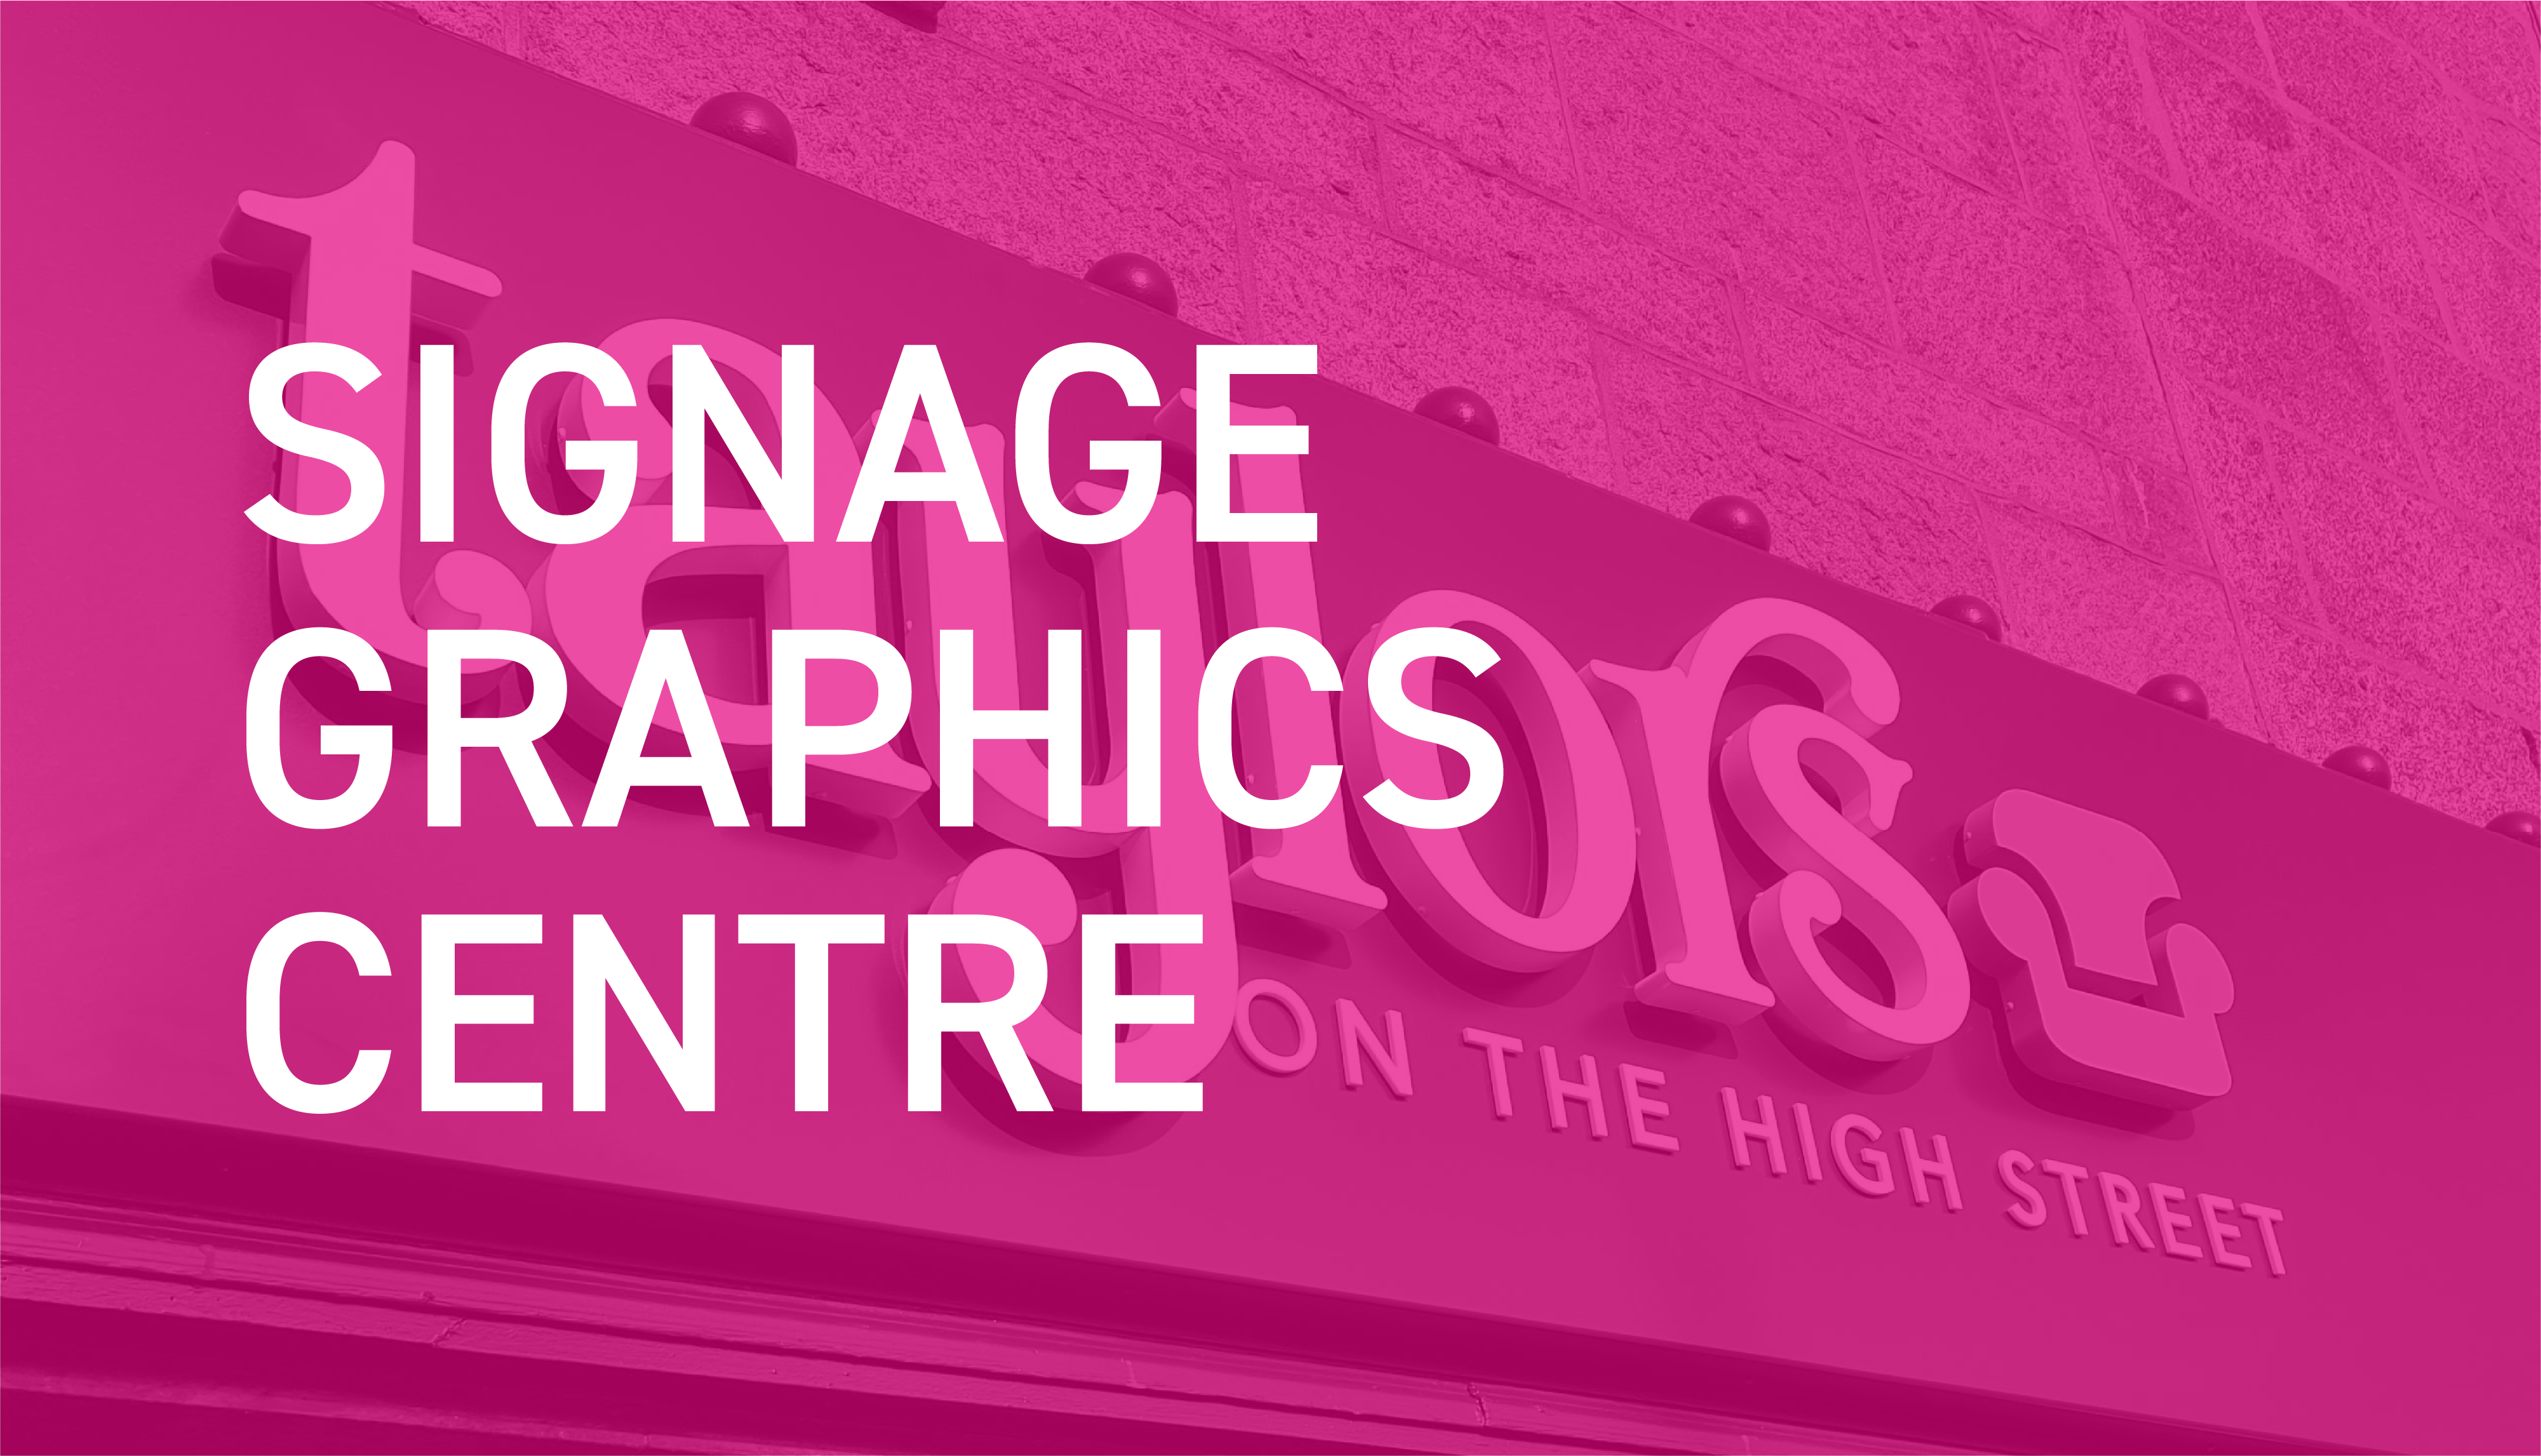 Visit the Signage Graphics Centre